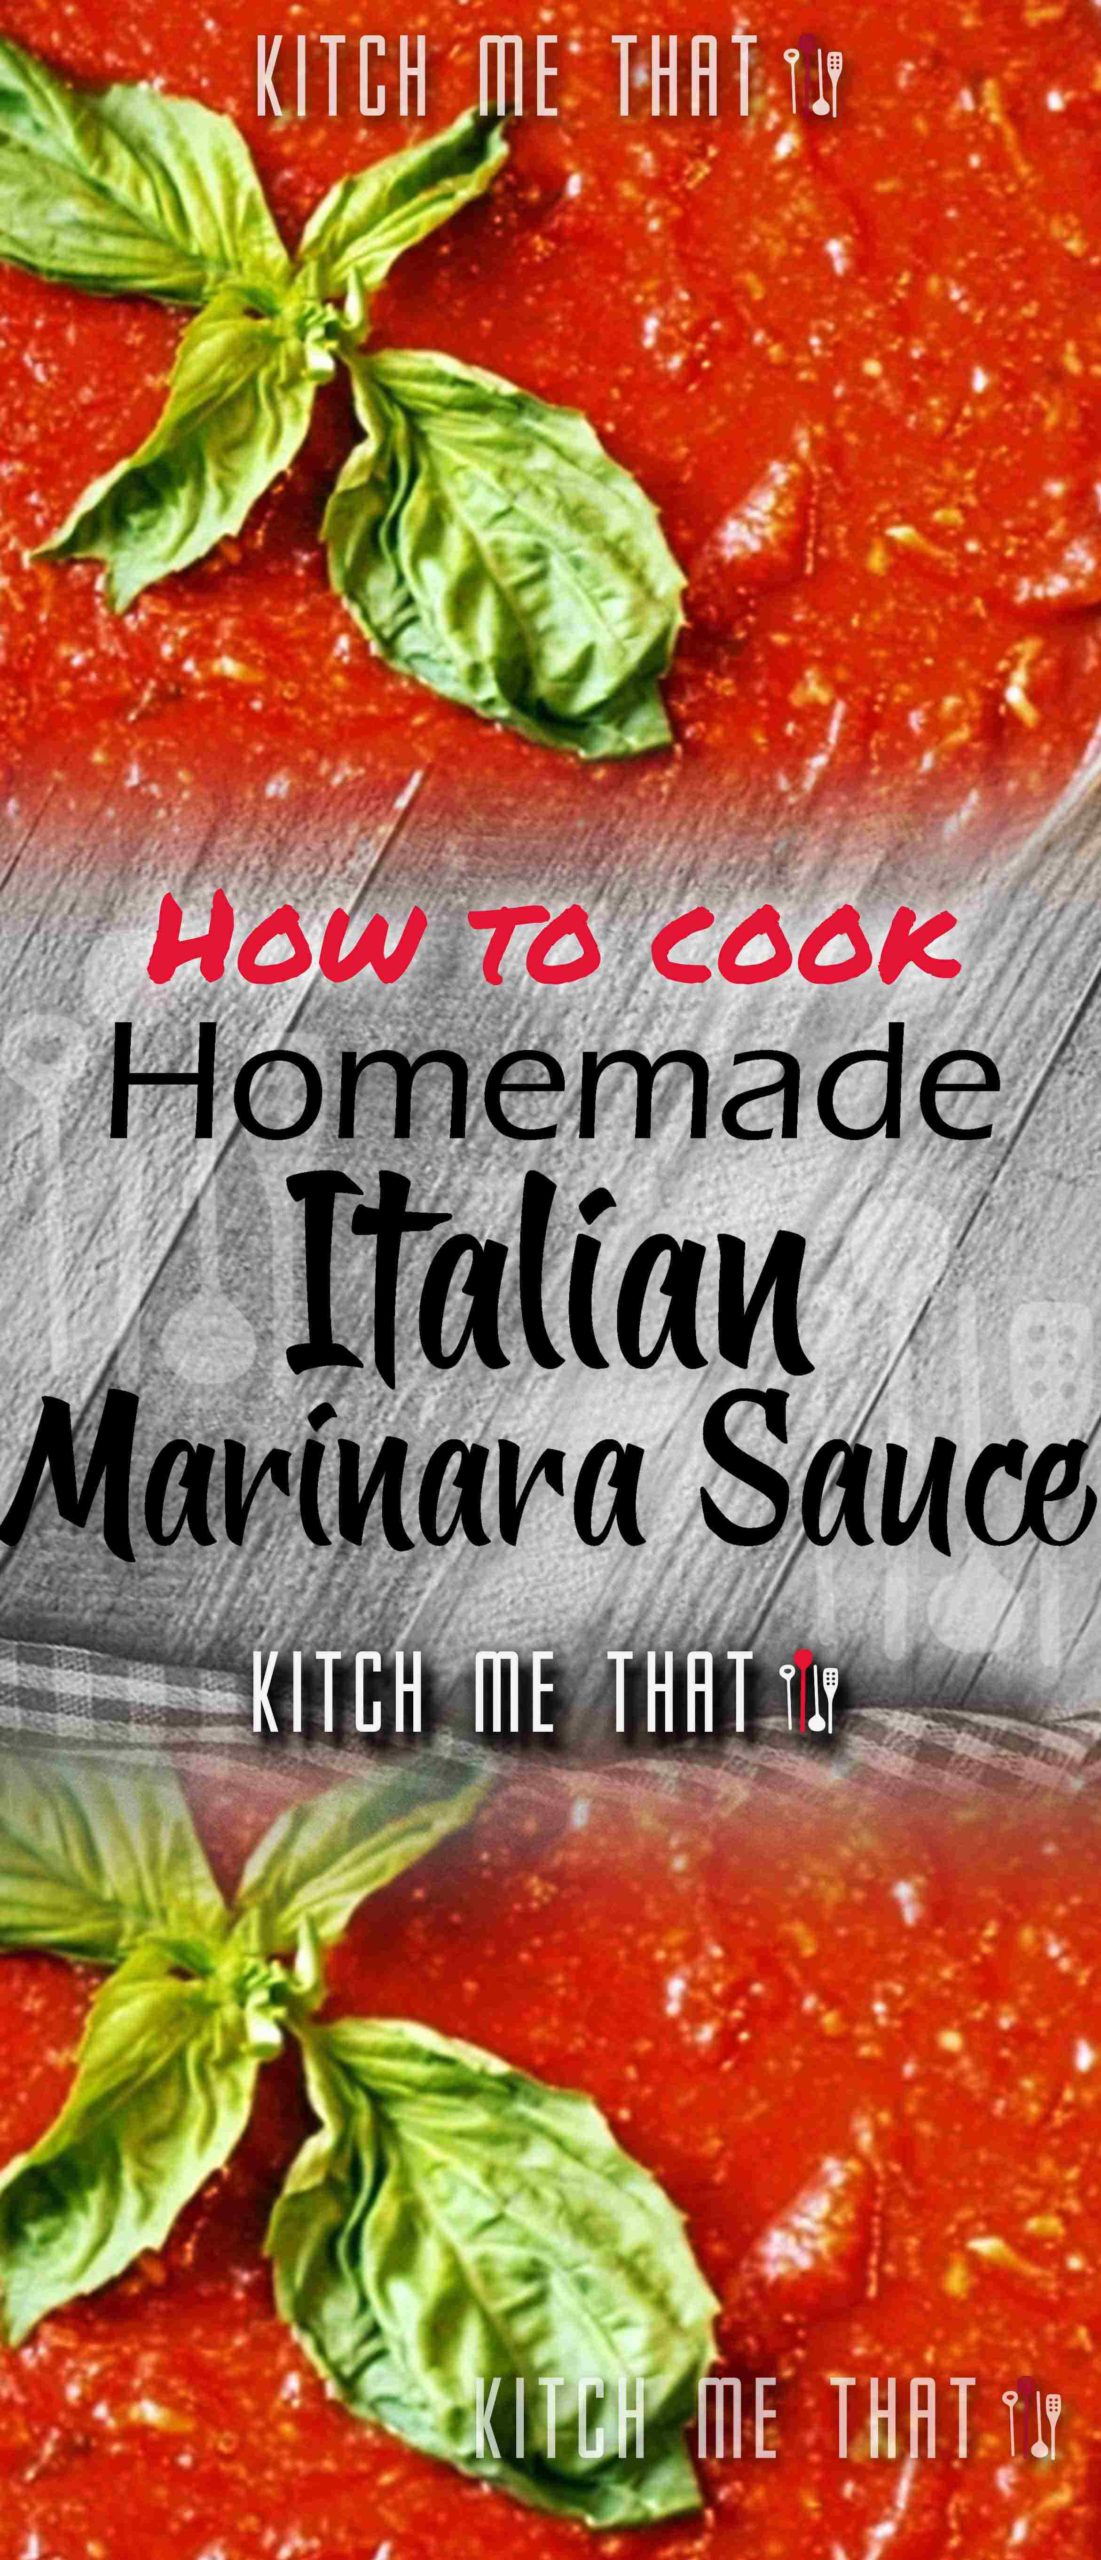 Homemade Italian Marinara Sauce